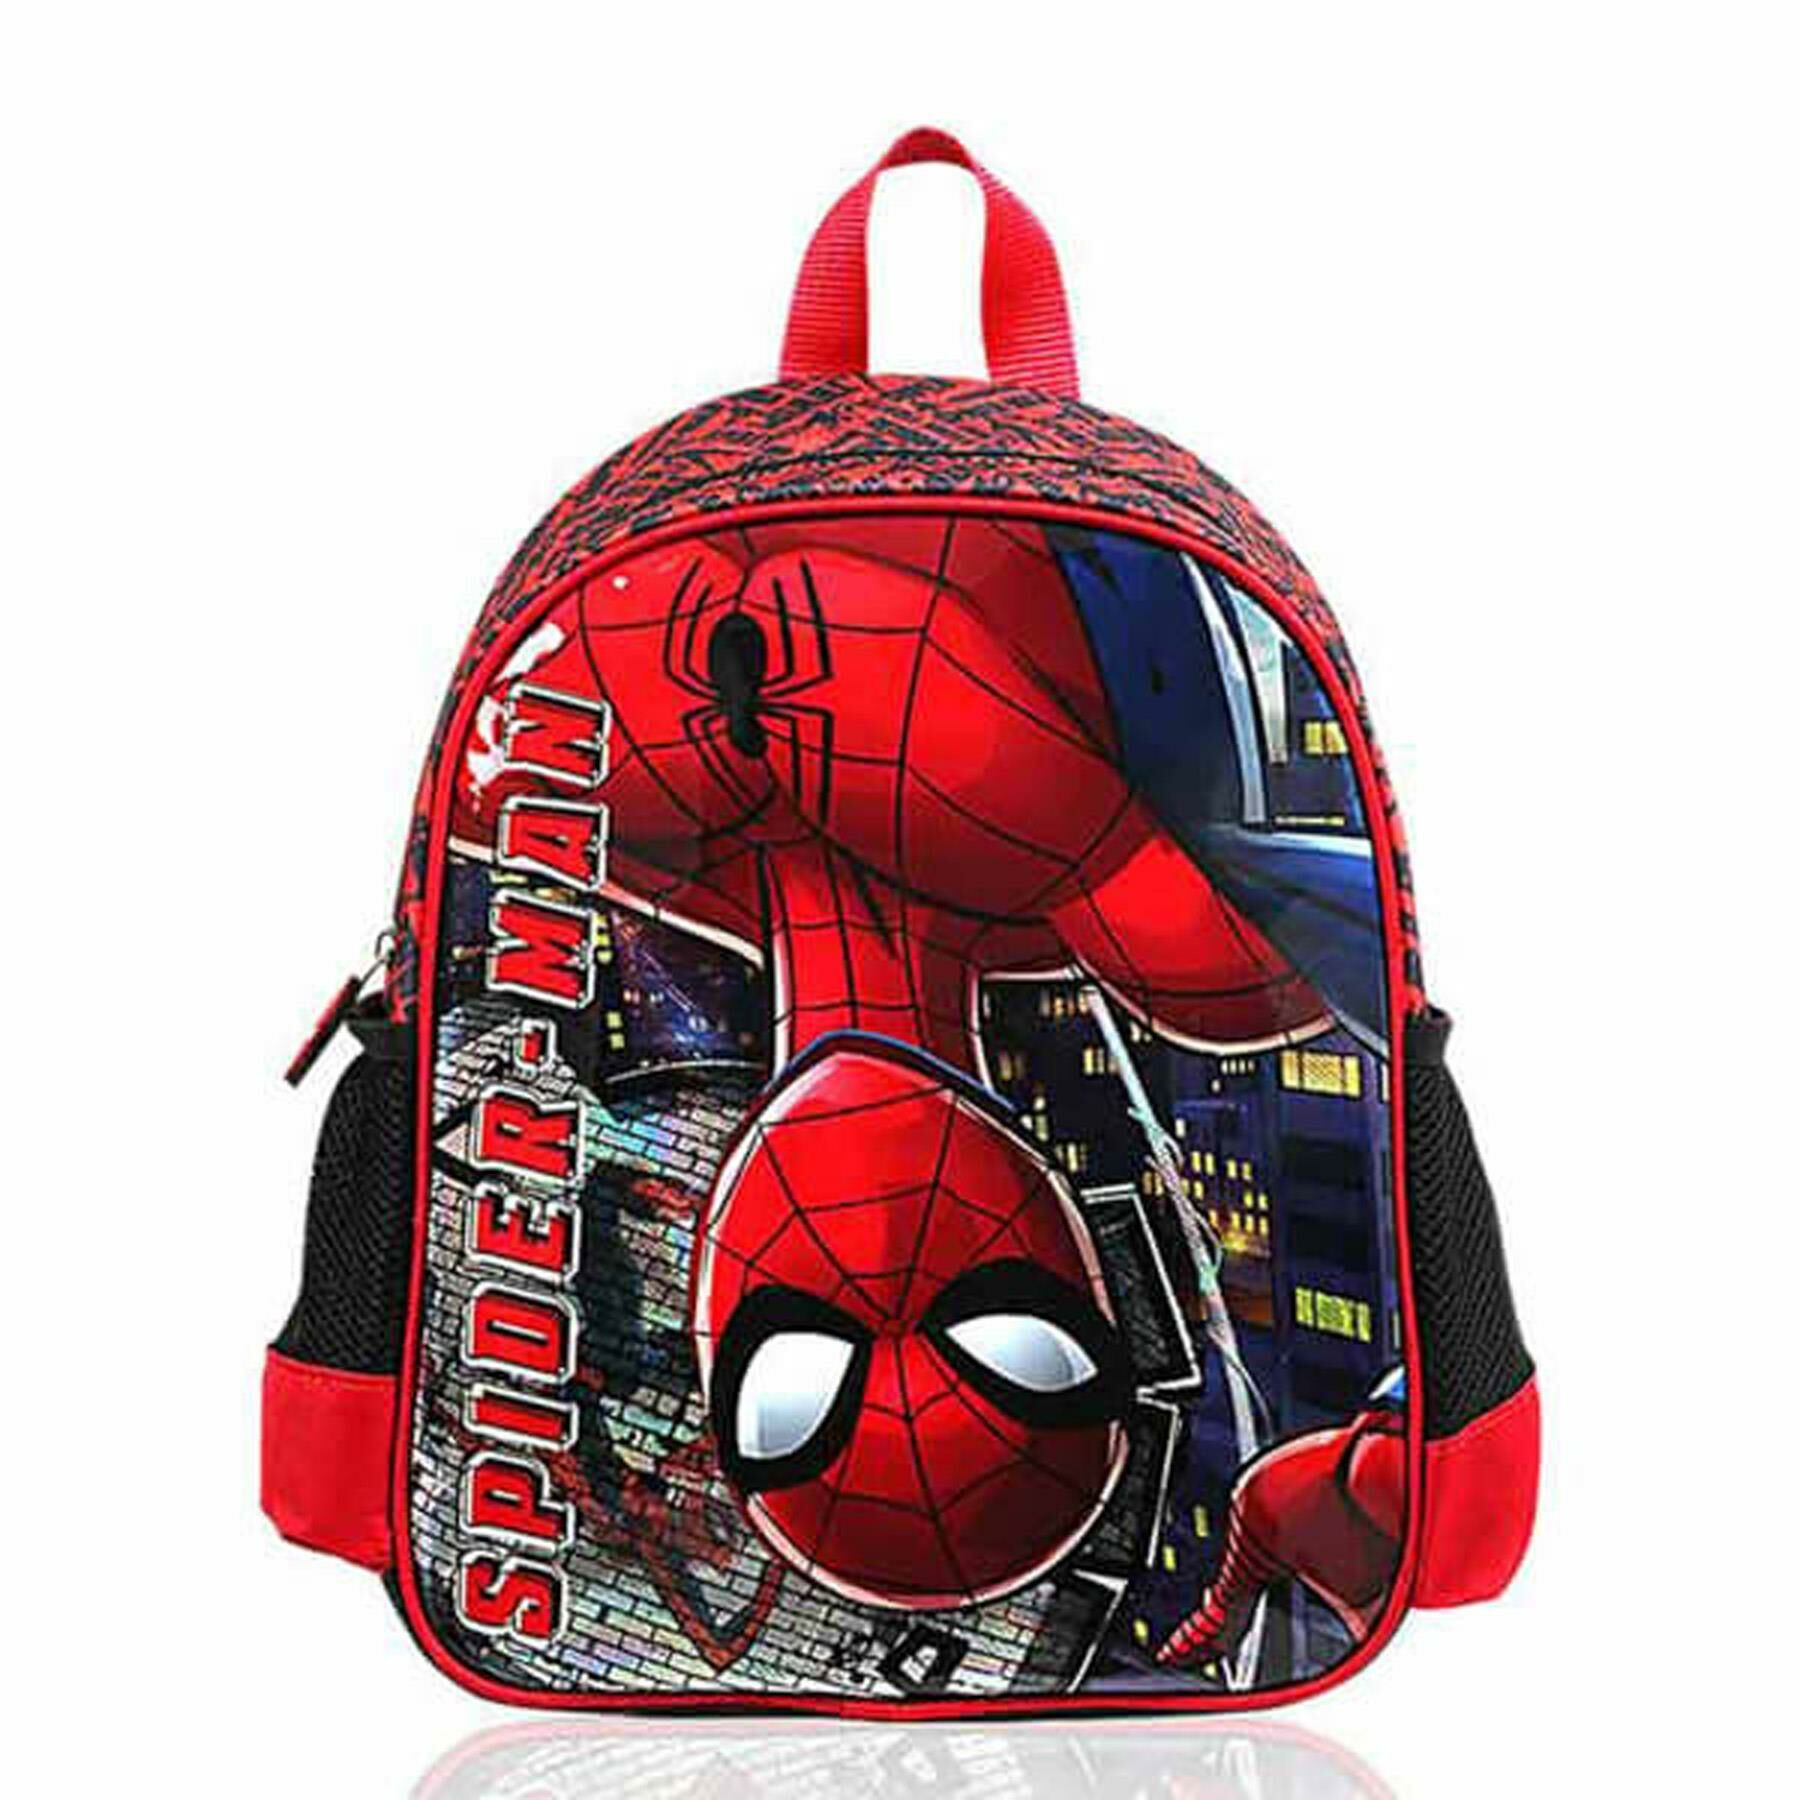 Frocx Spiderman Anaokulu Çantası 5264 (1 adet)